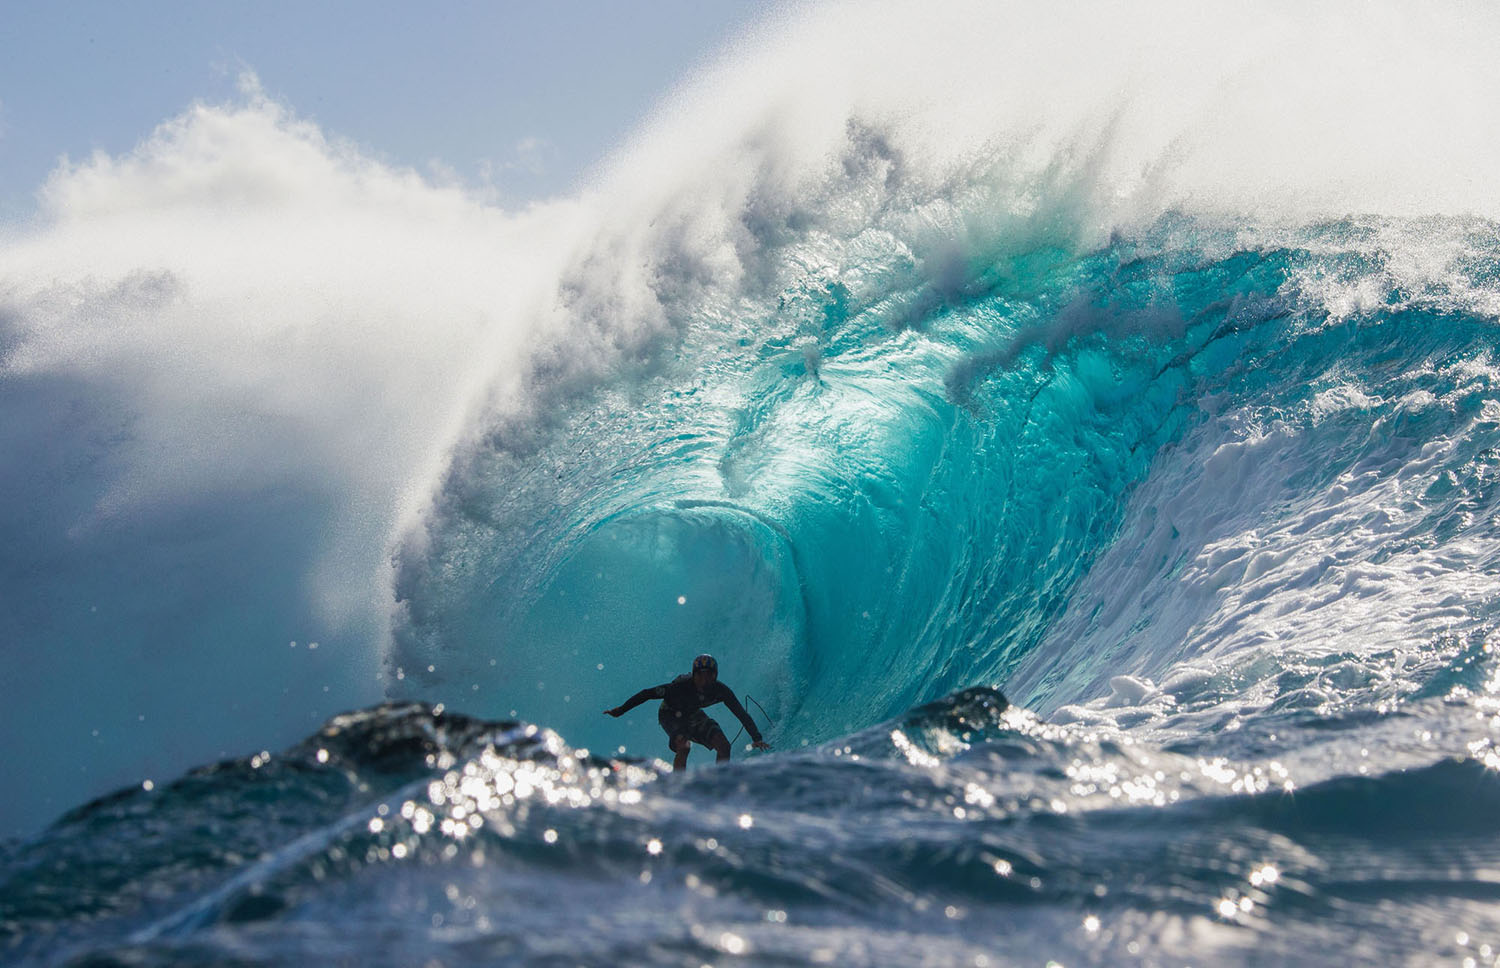 Blue-Wave Photos - The Atlantic